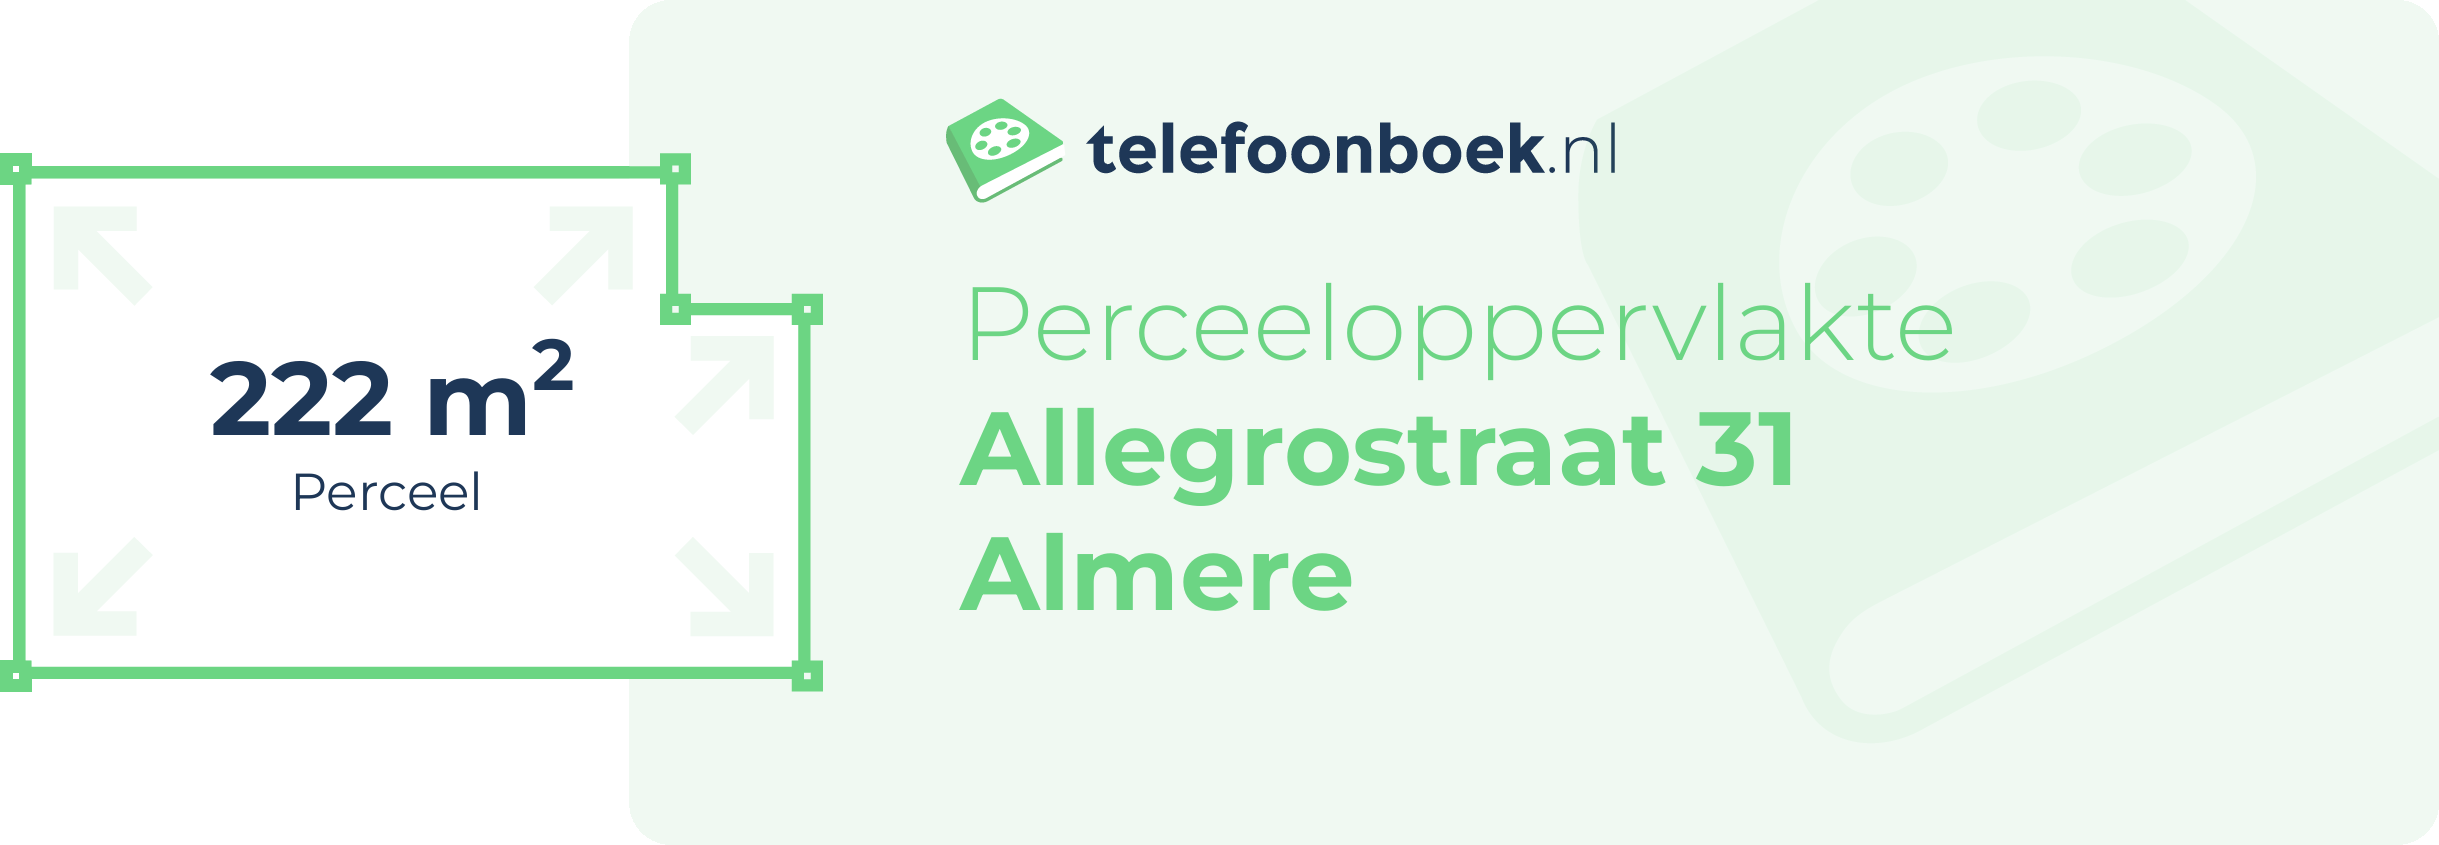 Perceeloppervlakte Allegrostraat 31 Almere